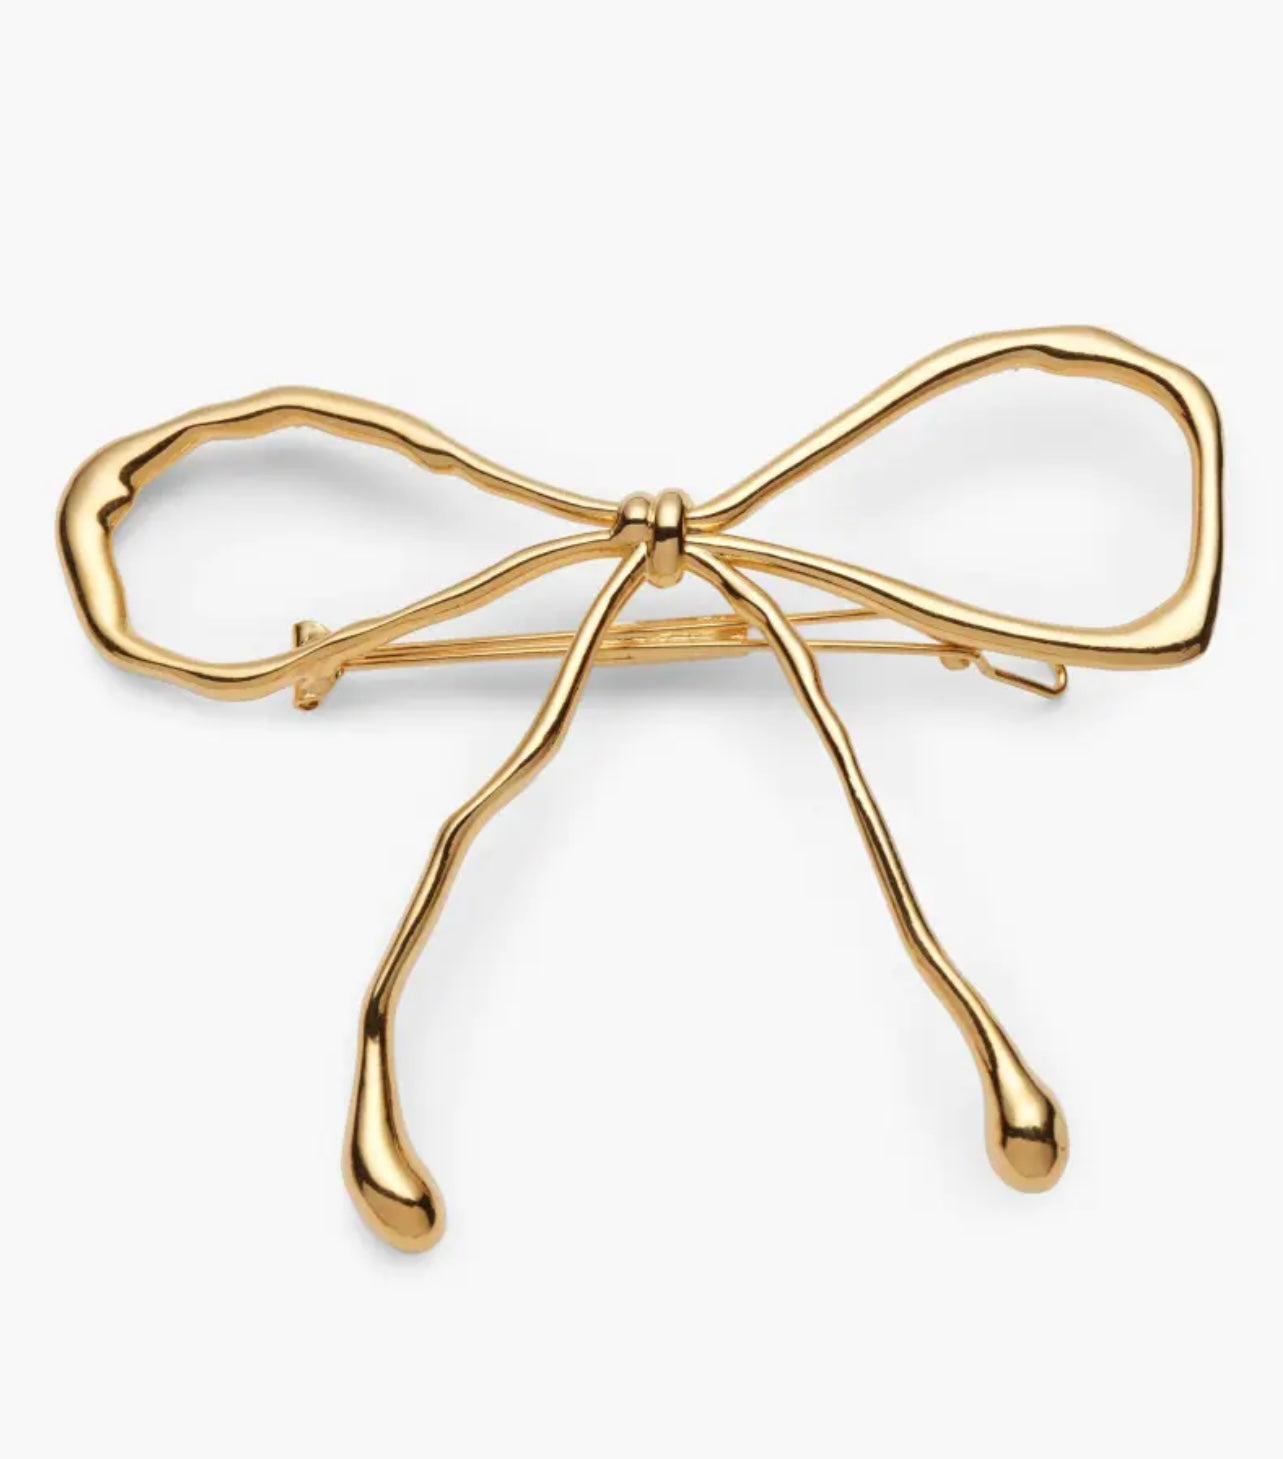 Gold Bow Clip